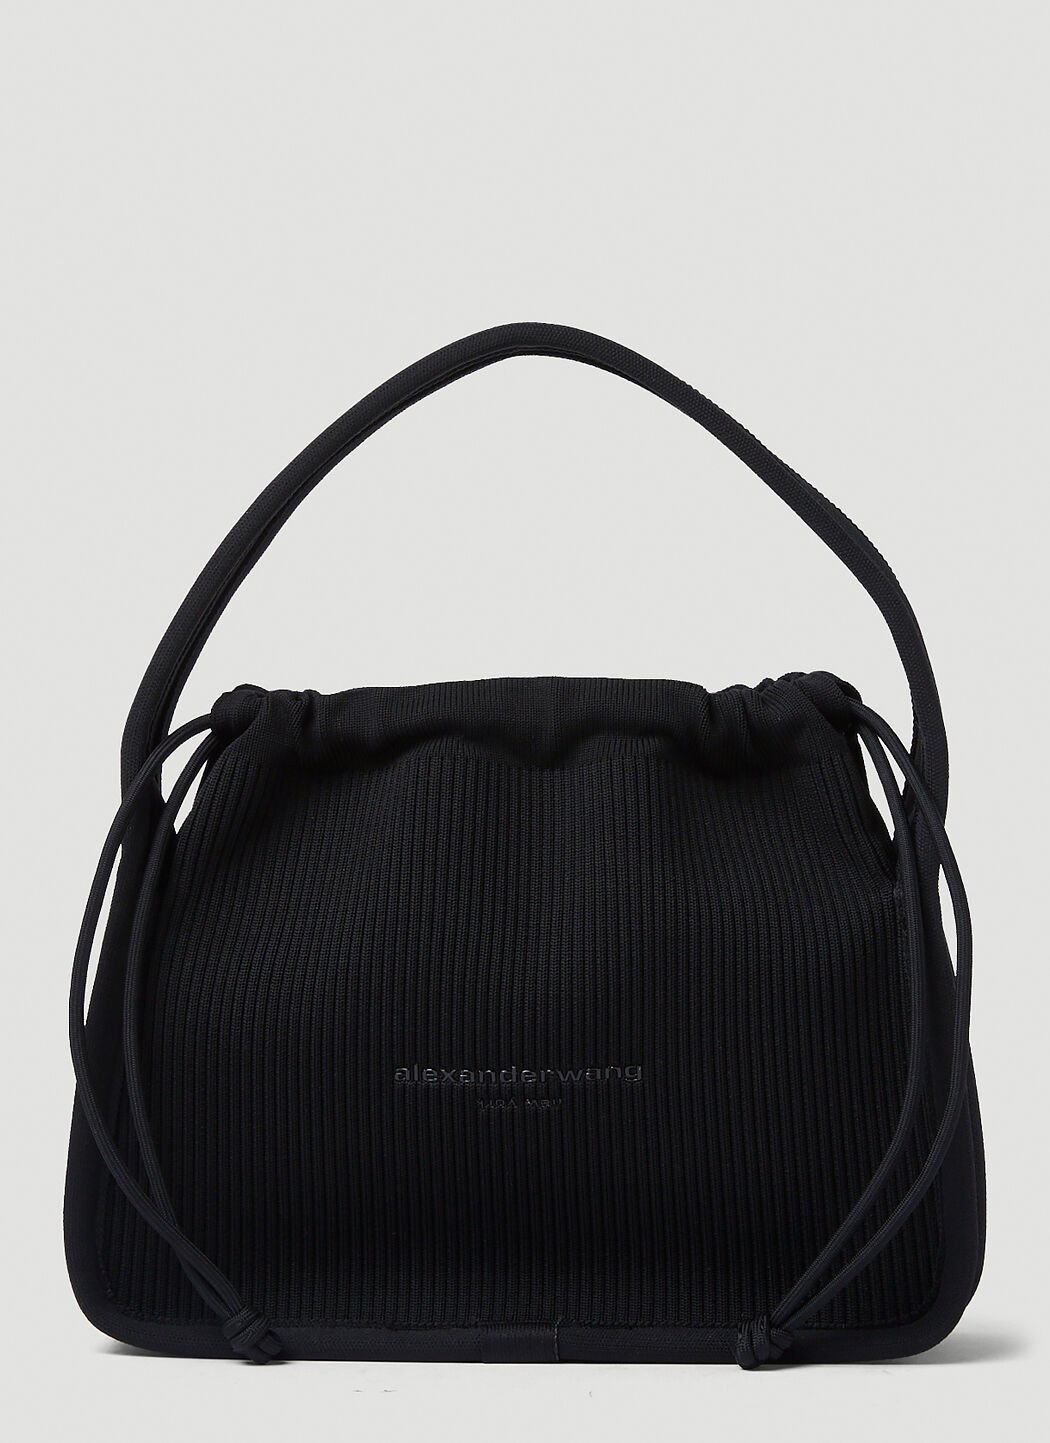 Alexander Wang Ryan Small Handbag Black awg0253017